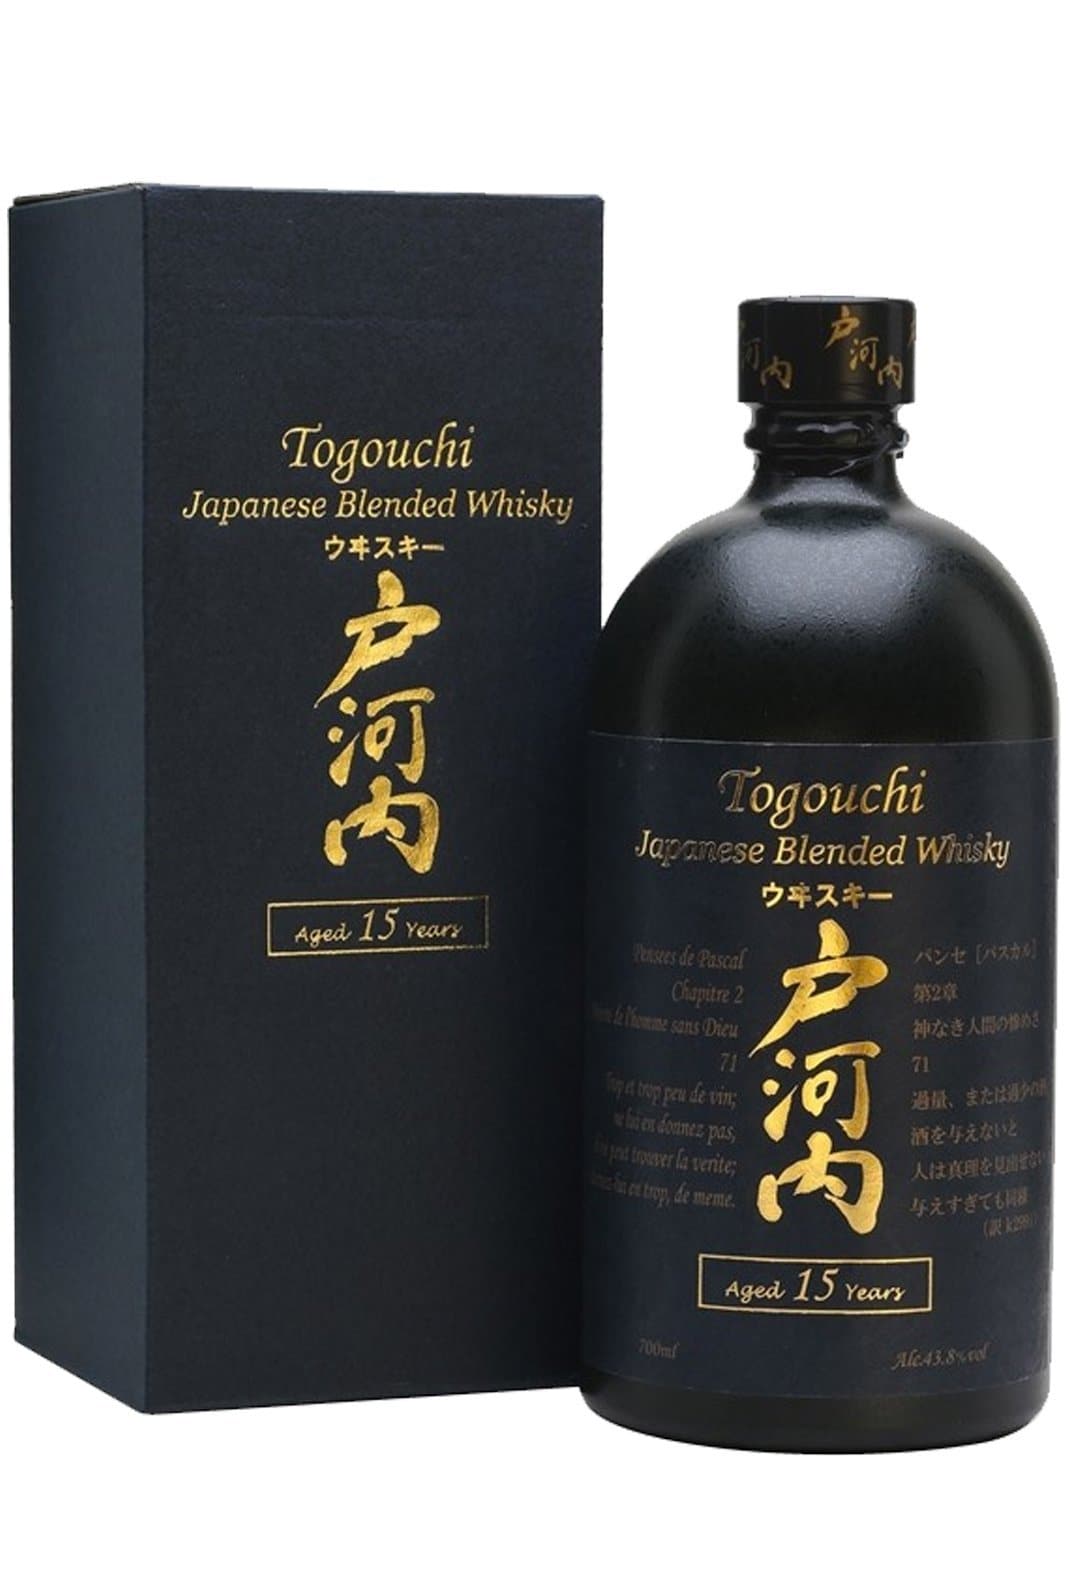 Togouchi 15 years Japanese Whisky 43.8% 700ml | Whiskey | Shop online at Spirits of France